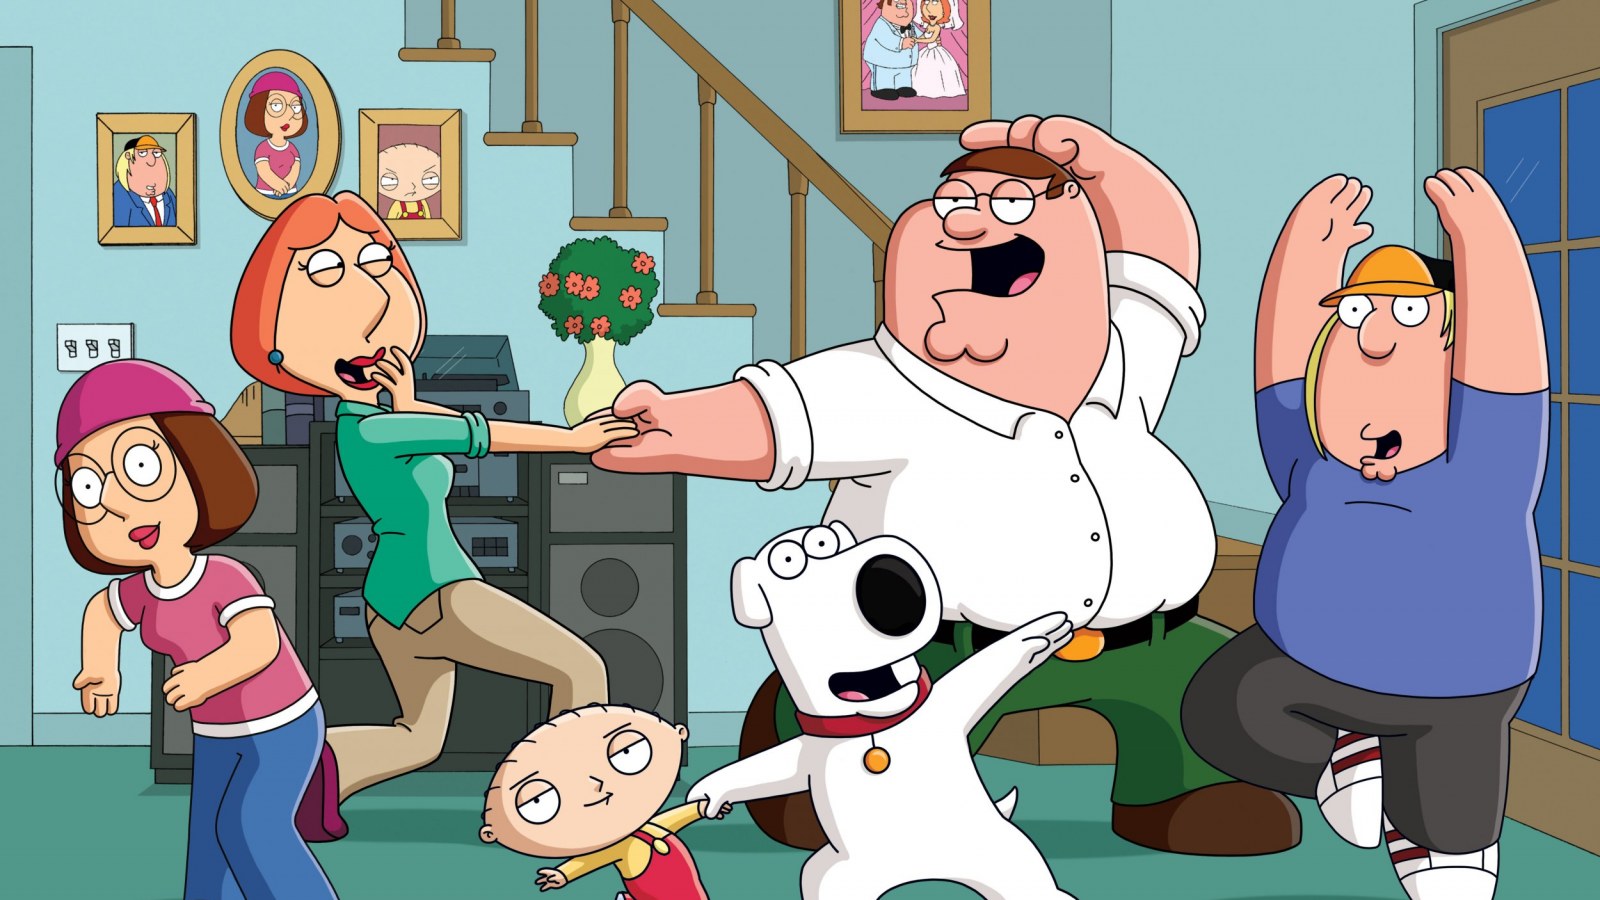 Family Guy Seasons 22 & 23; FOX Comedy Series Renewed Through 202425